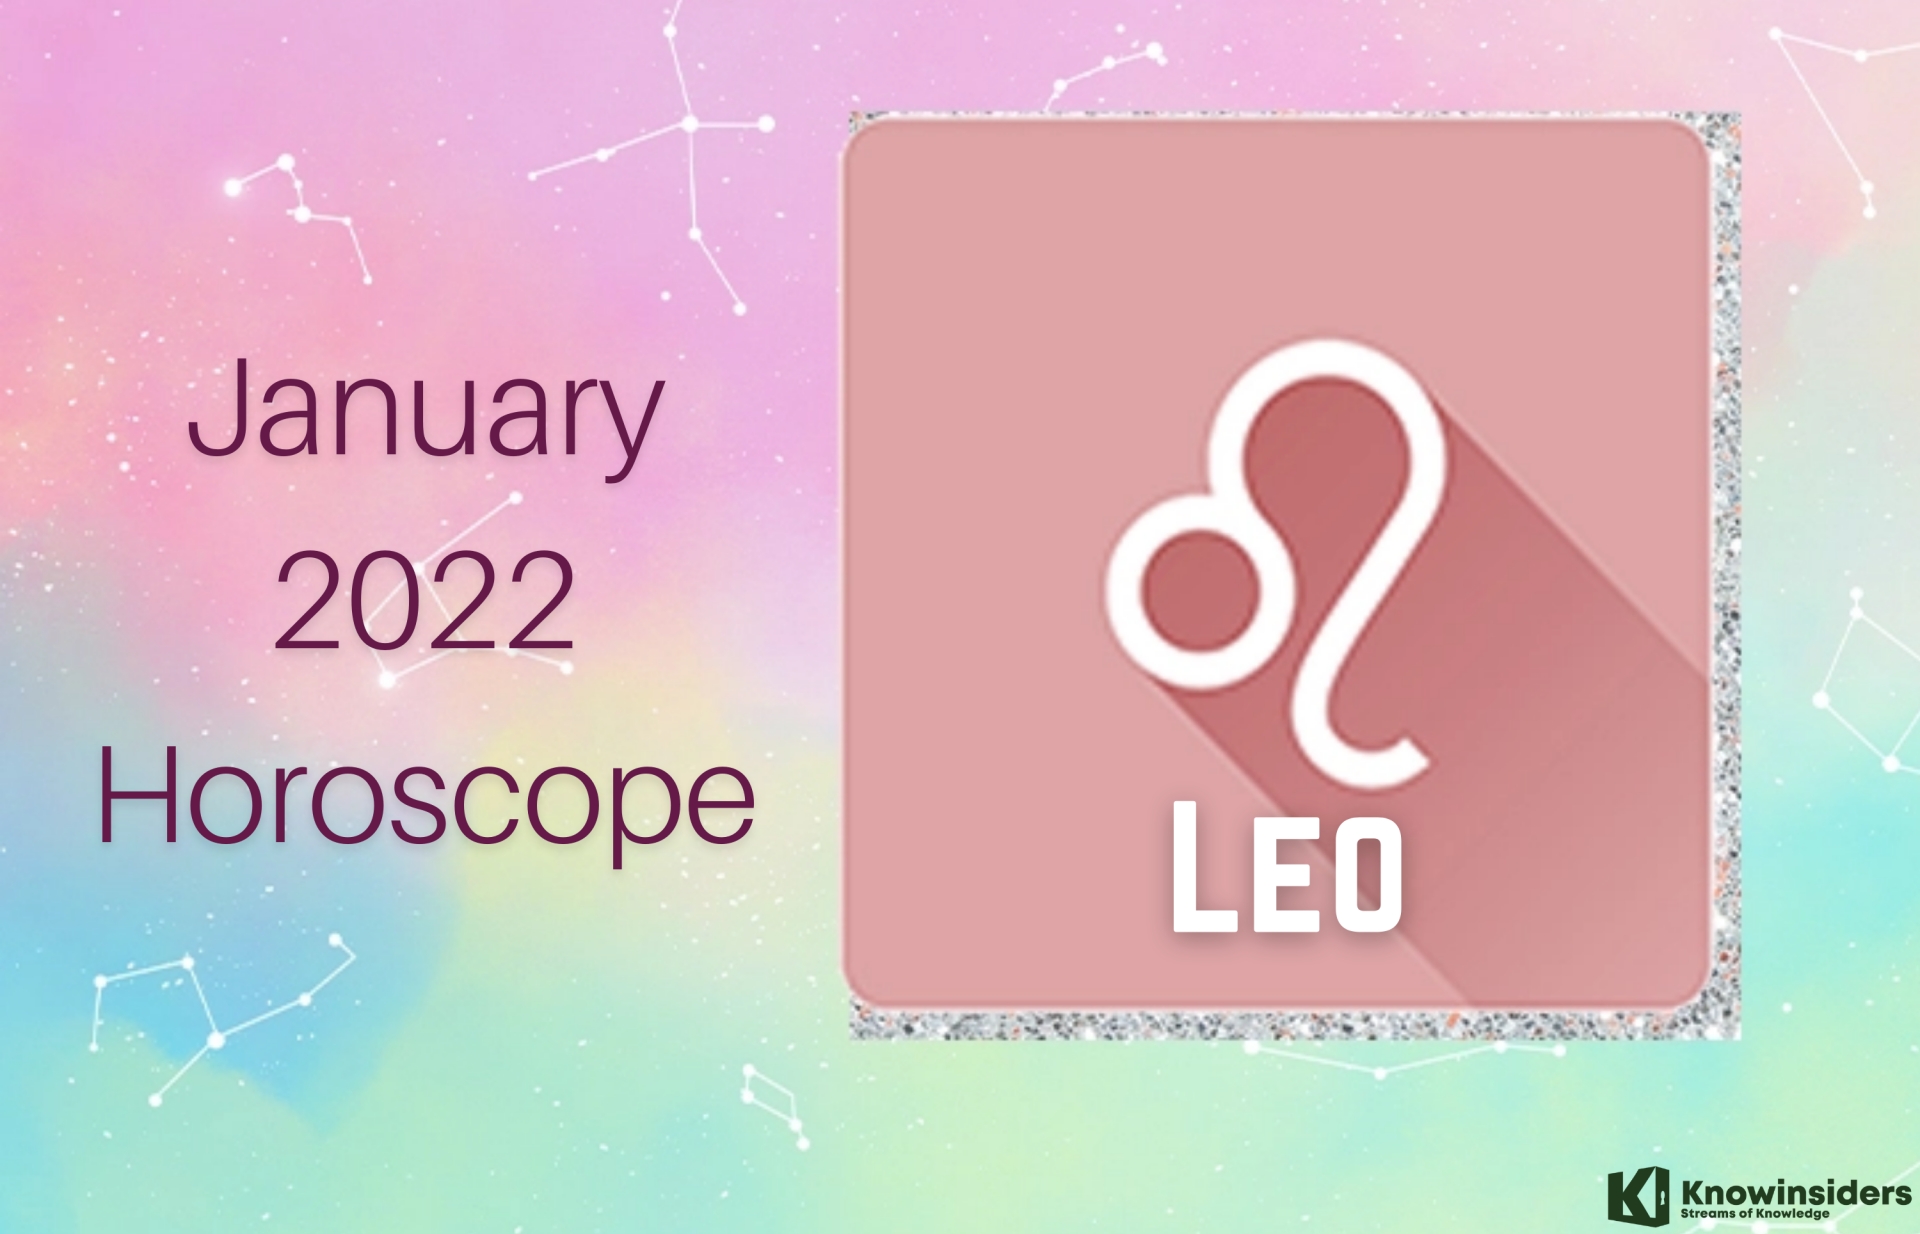 LEO January 2022 Horoscope: Prediction for Love, Career, Money